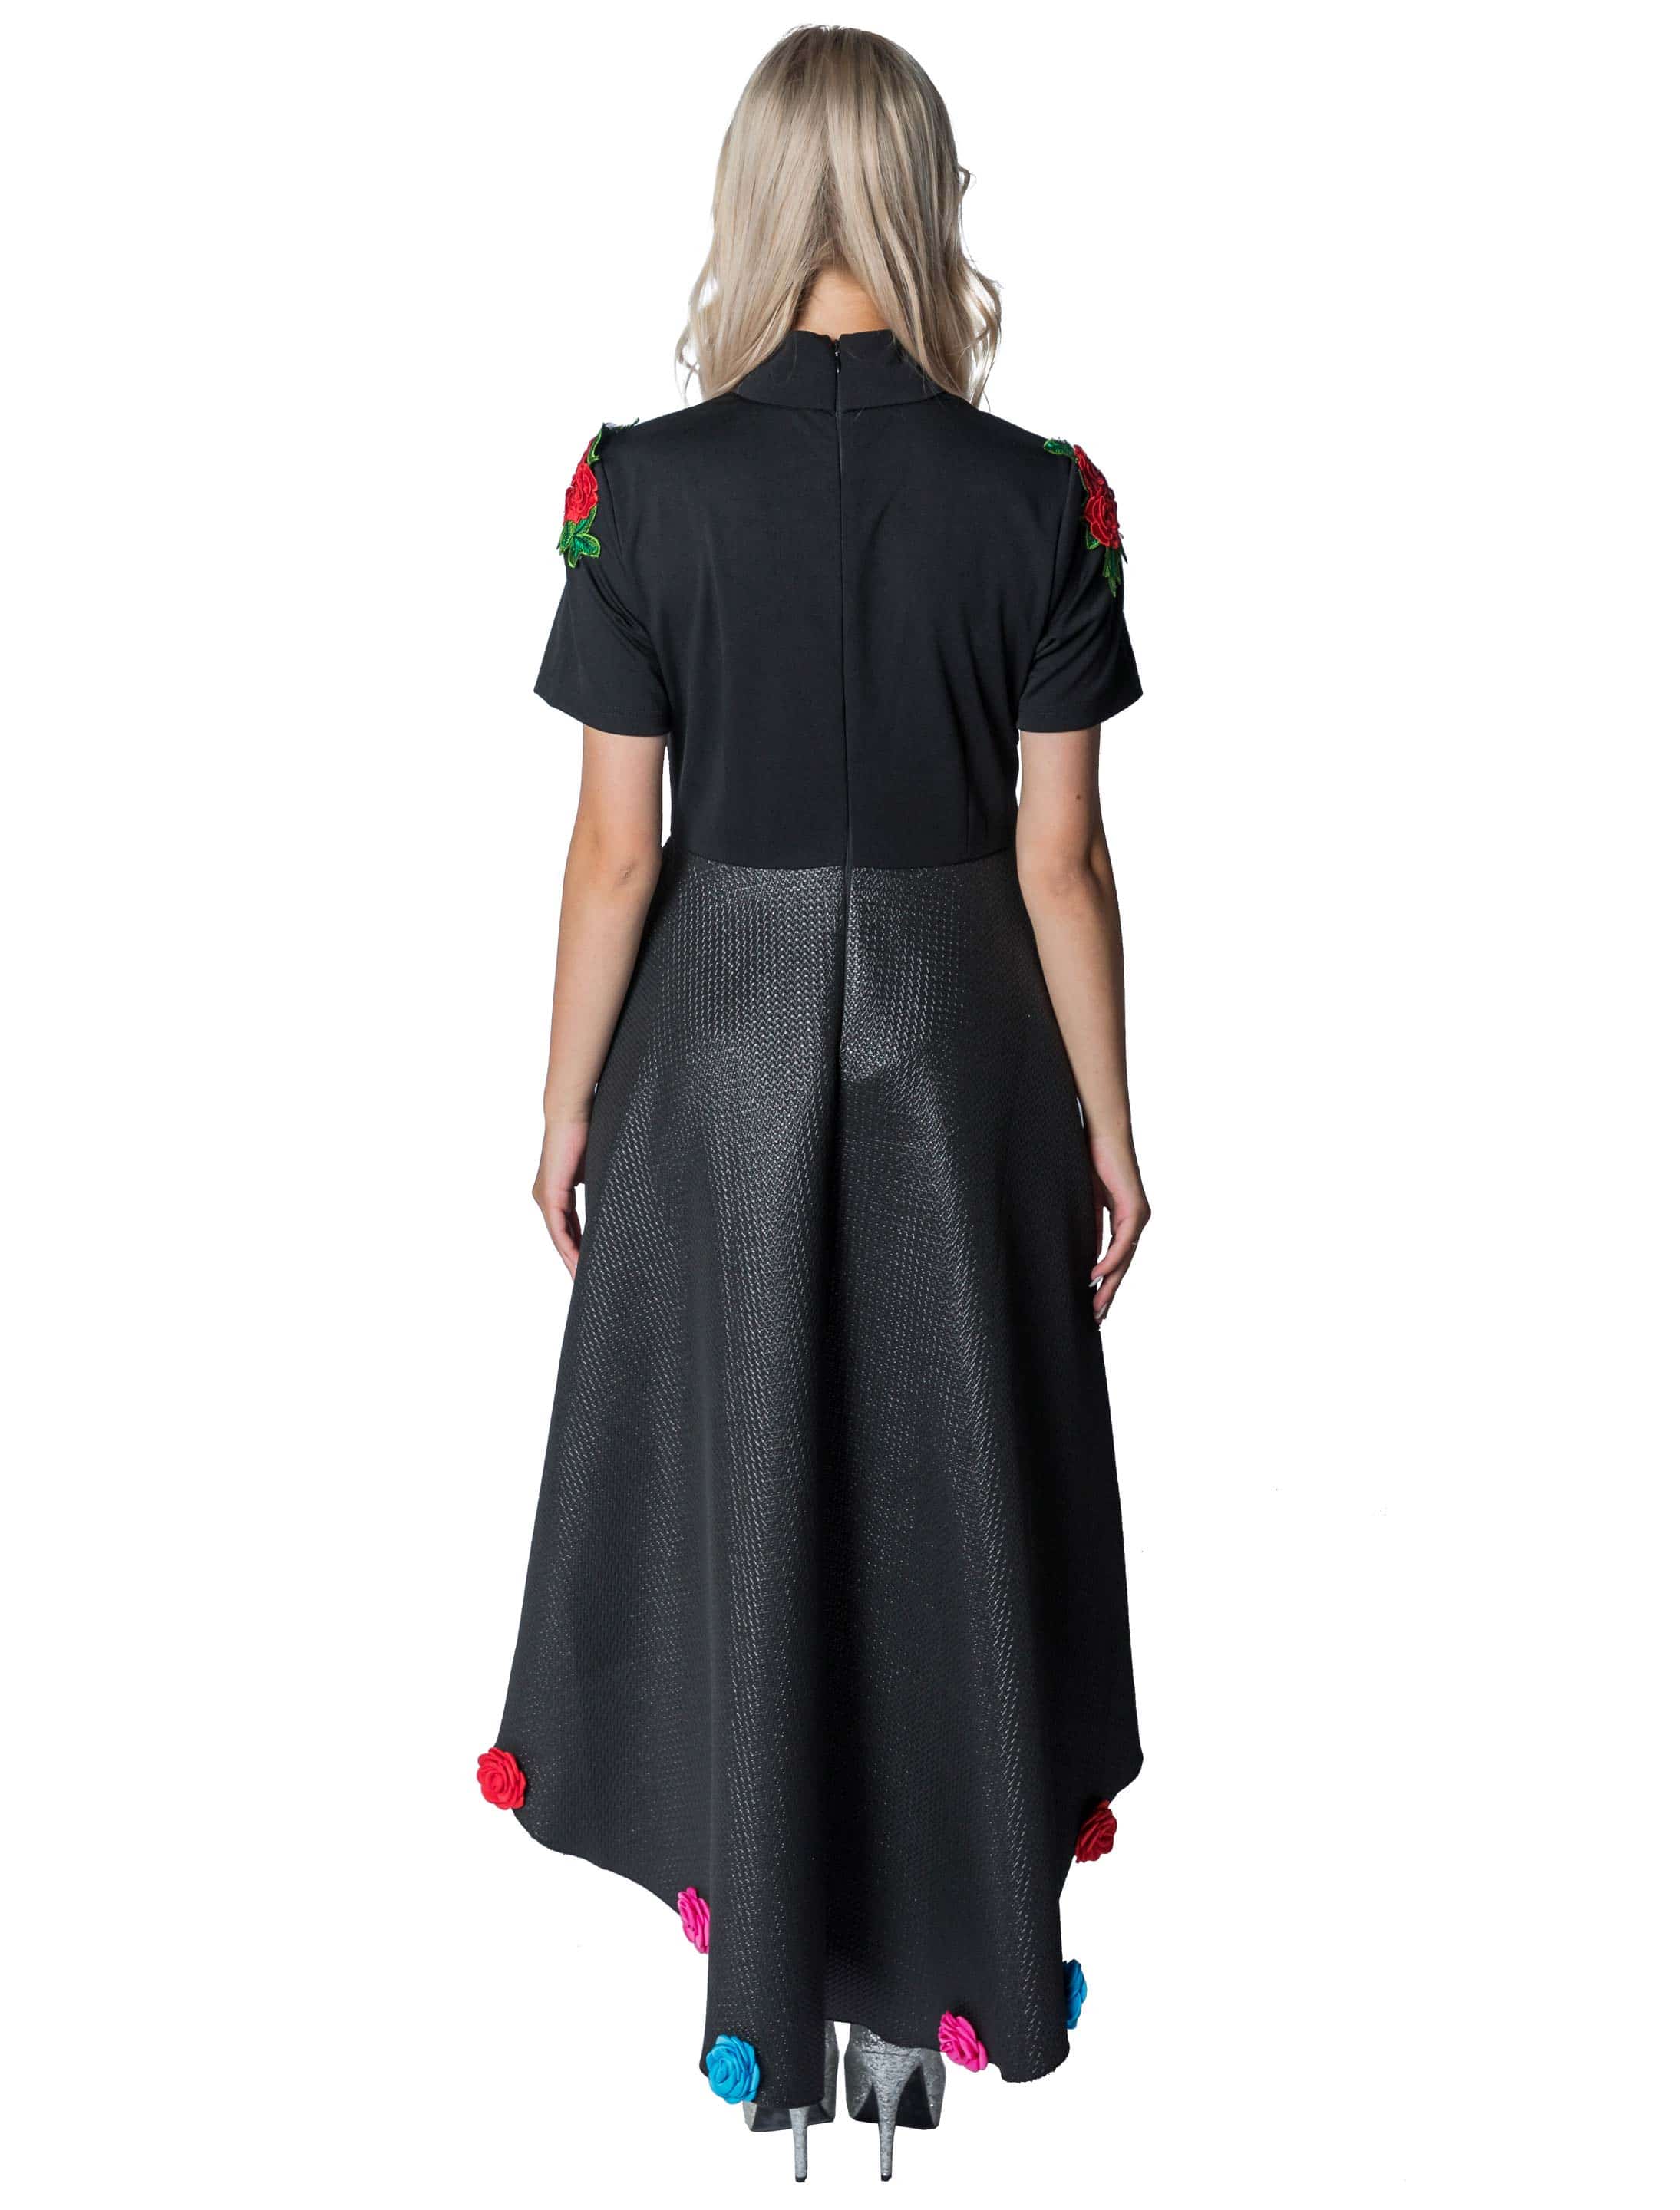 Kleid Dia de los Muertos Damen schwarz/rot XL